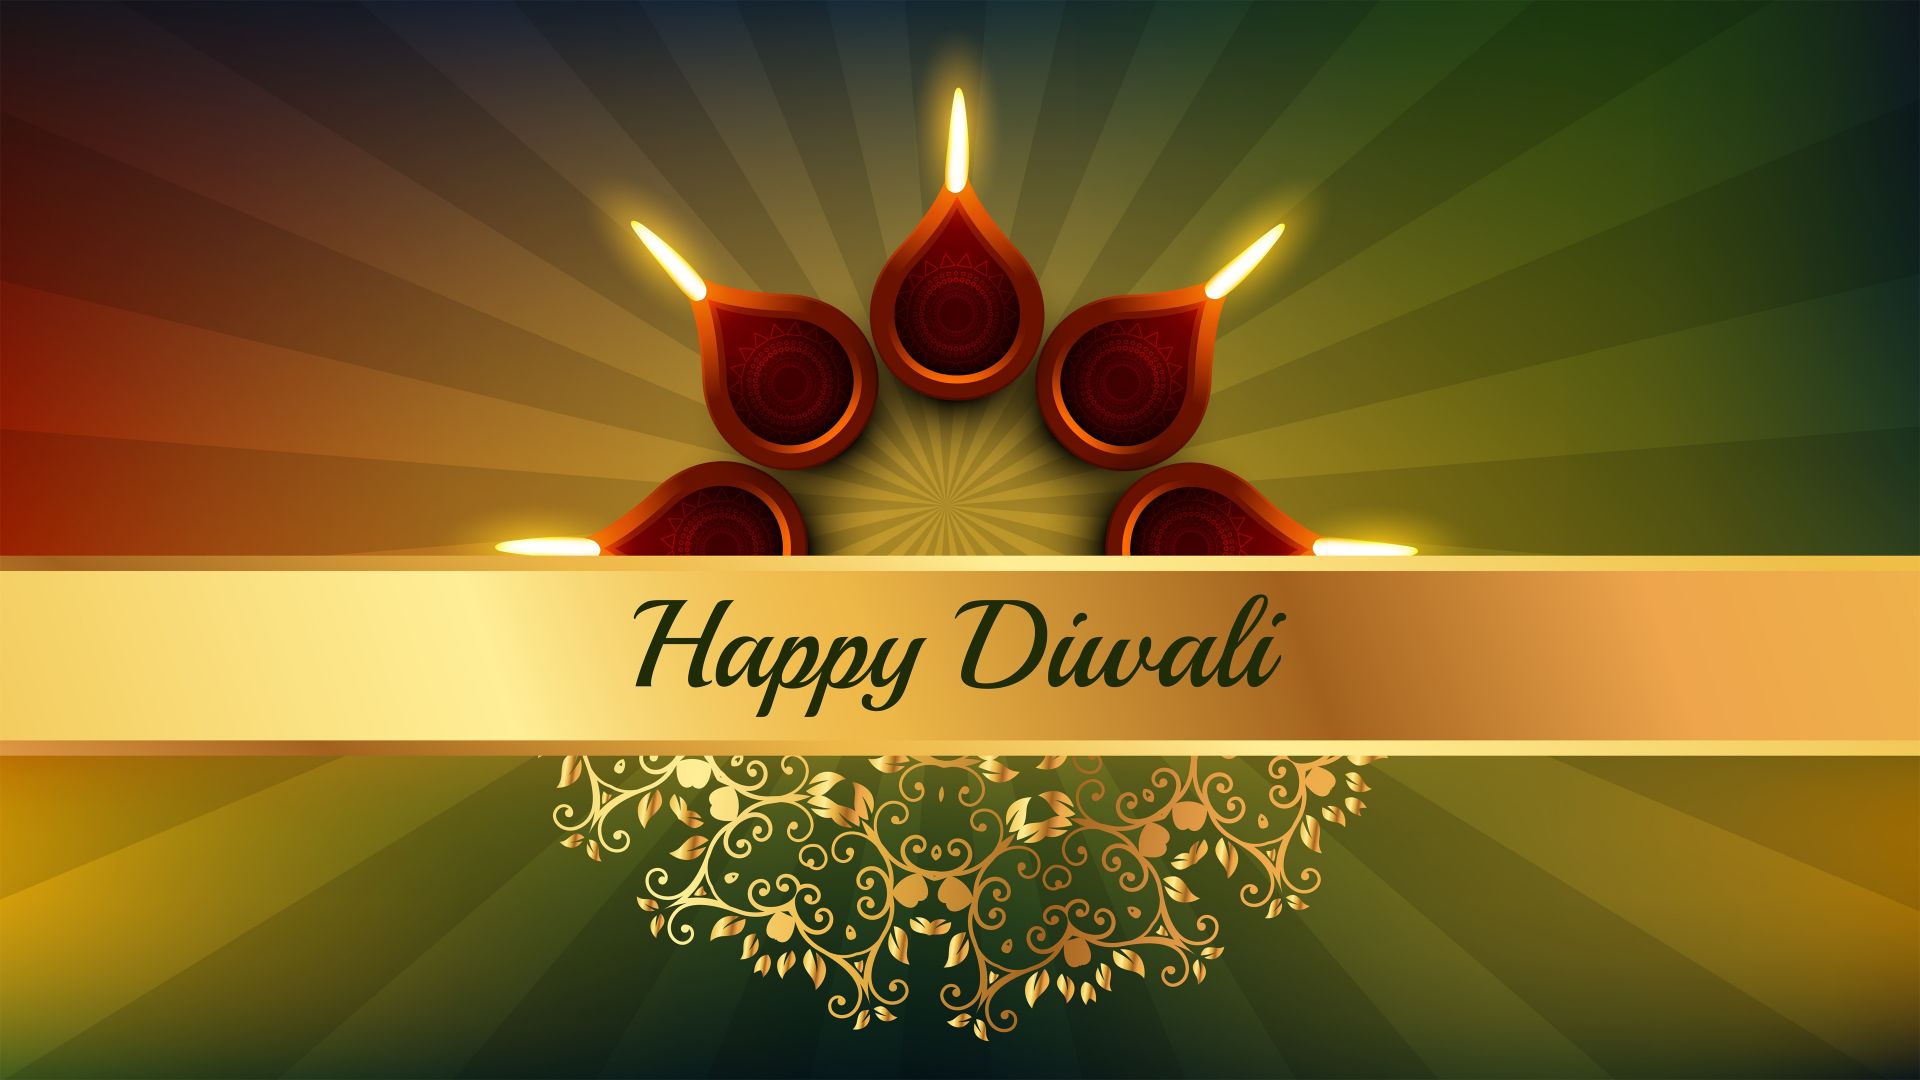 Wallpaper Happy diwali wishes